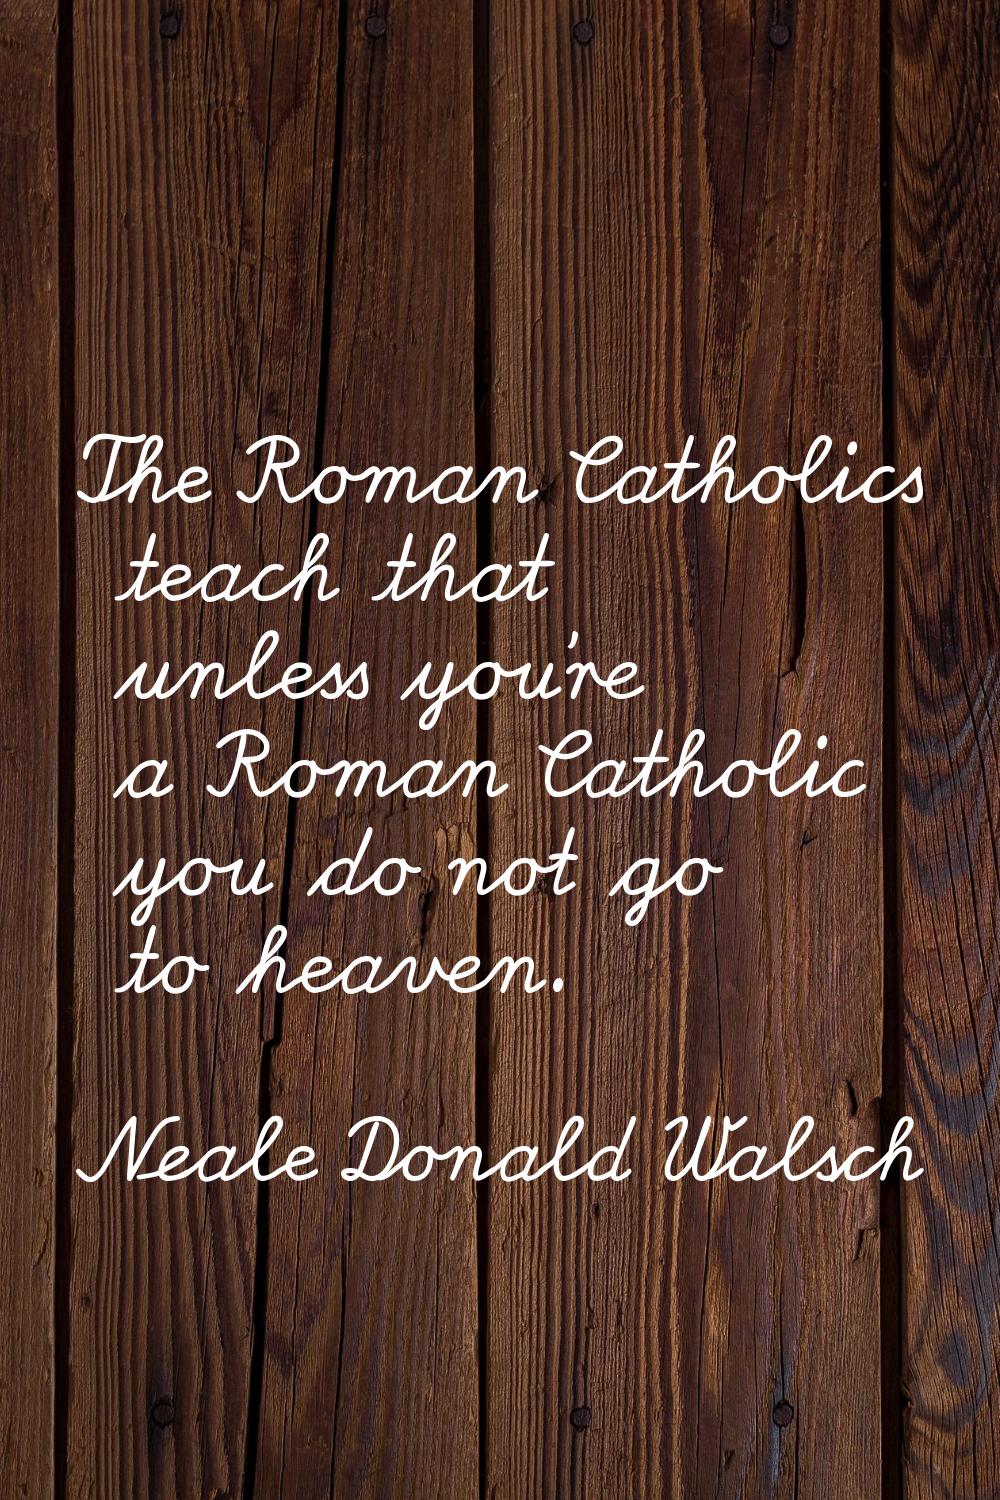 The Roman Catholics teach that unless you're a Roman Catholic you do not go to heaven.